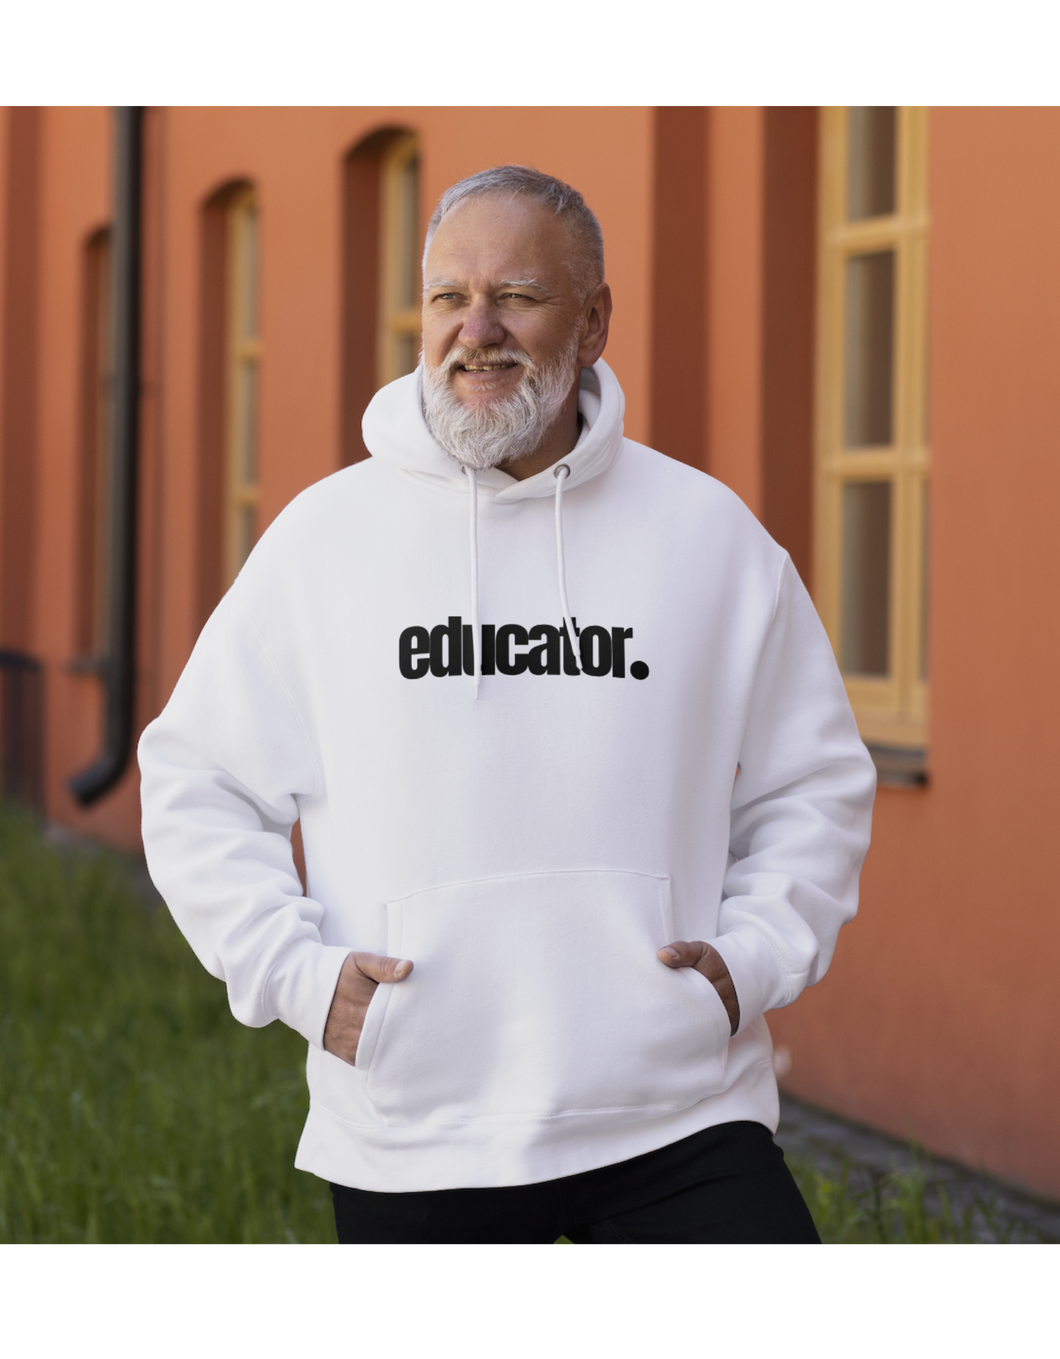 Educator. Sweatshirt